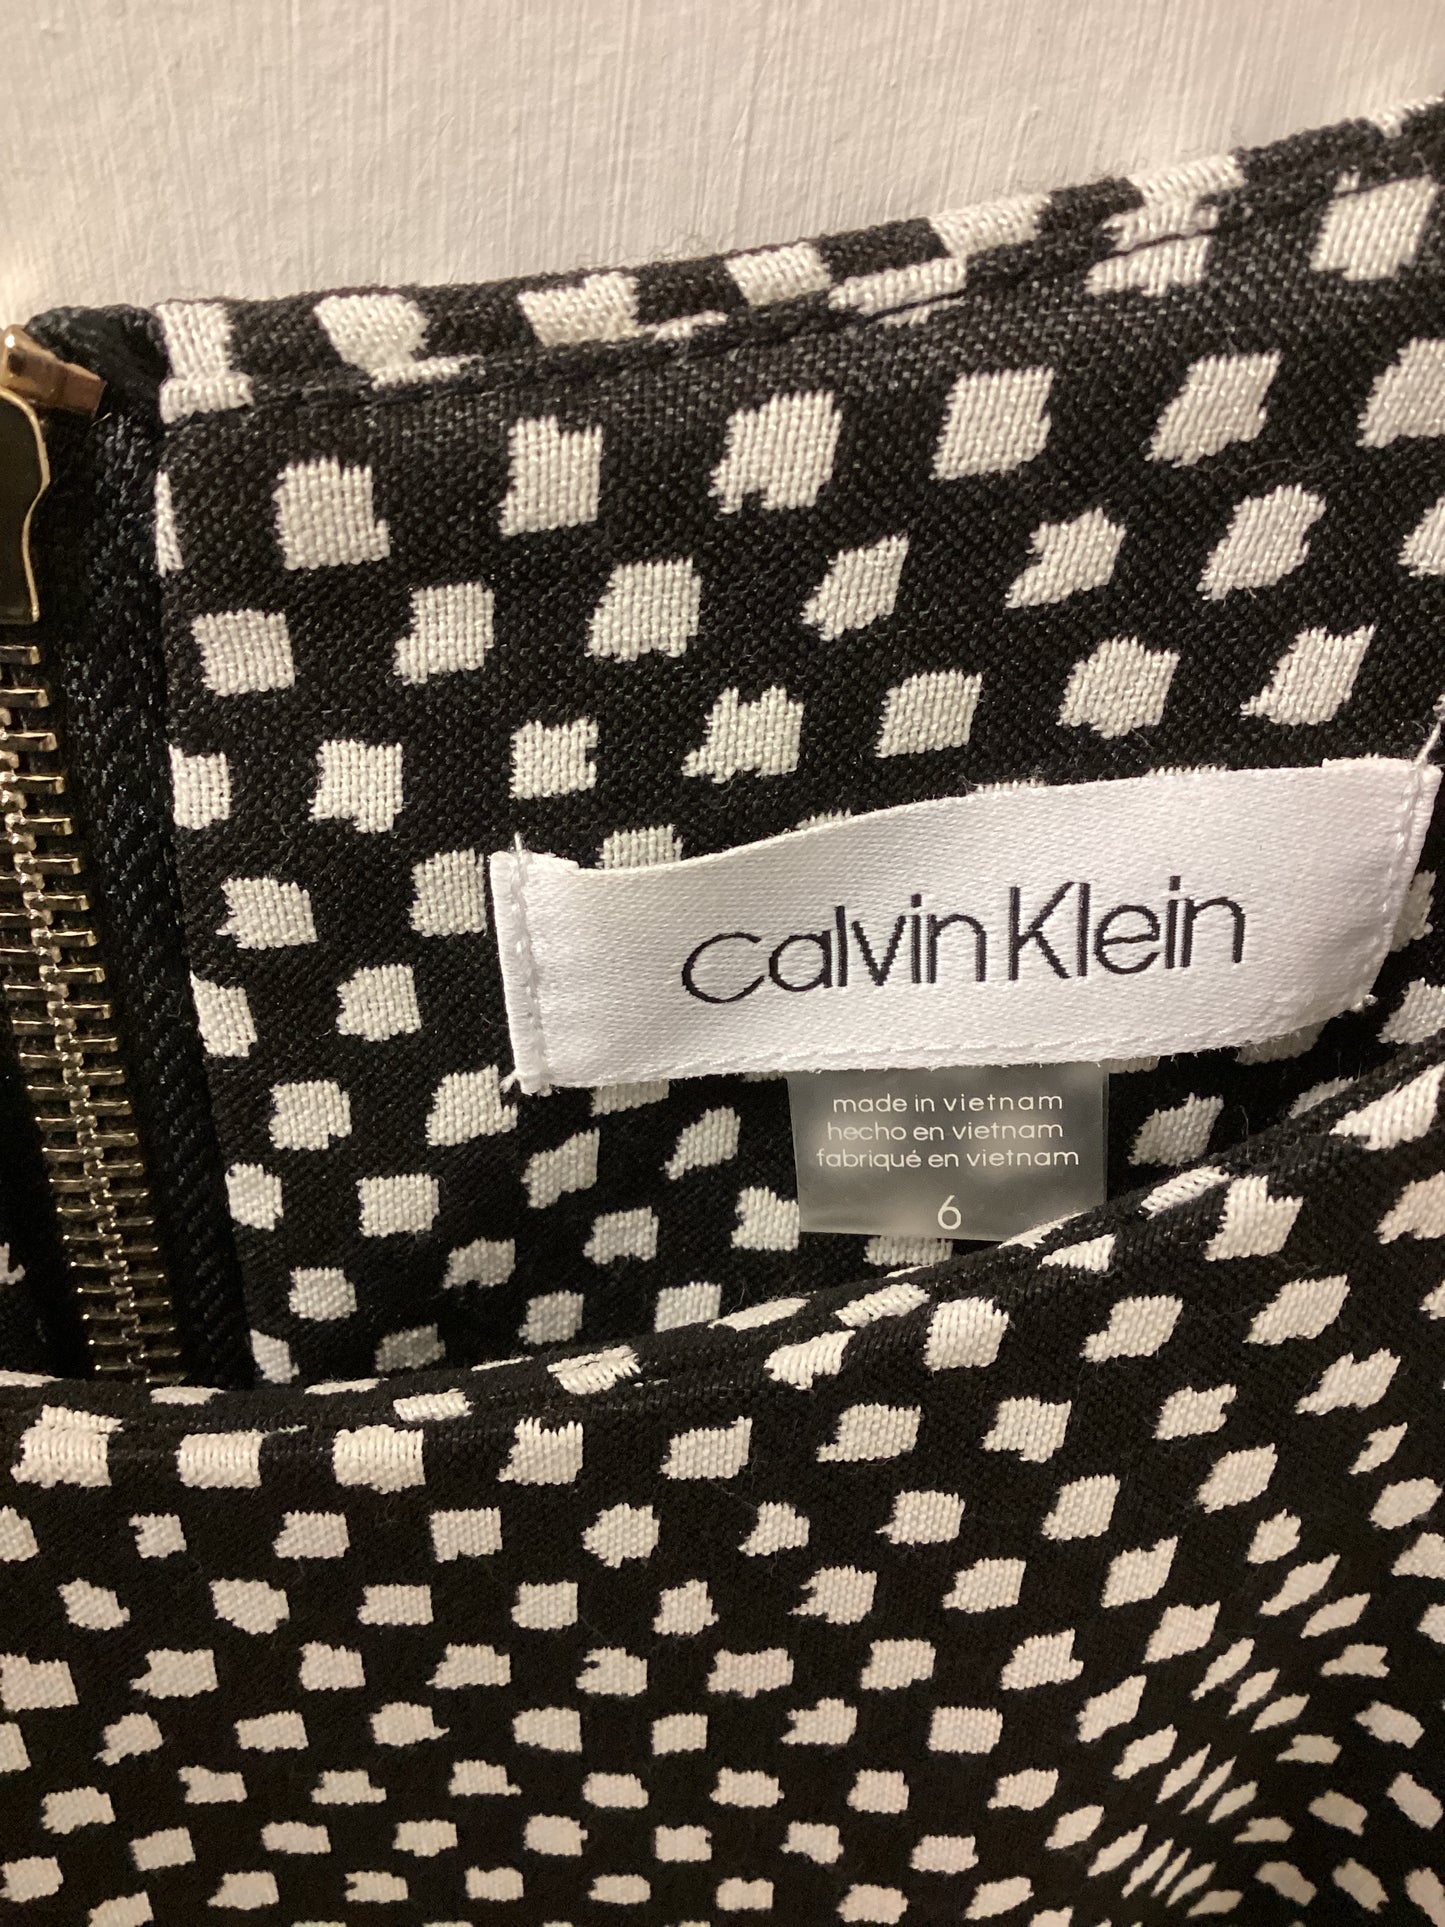 Calvin Klein Women’s Sleeveless Black and White Dress Size UK 6